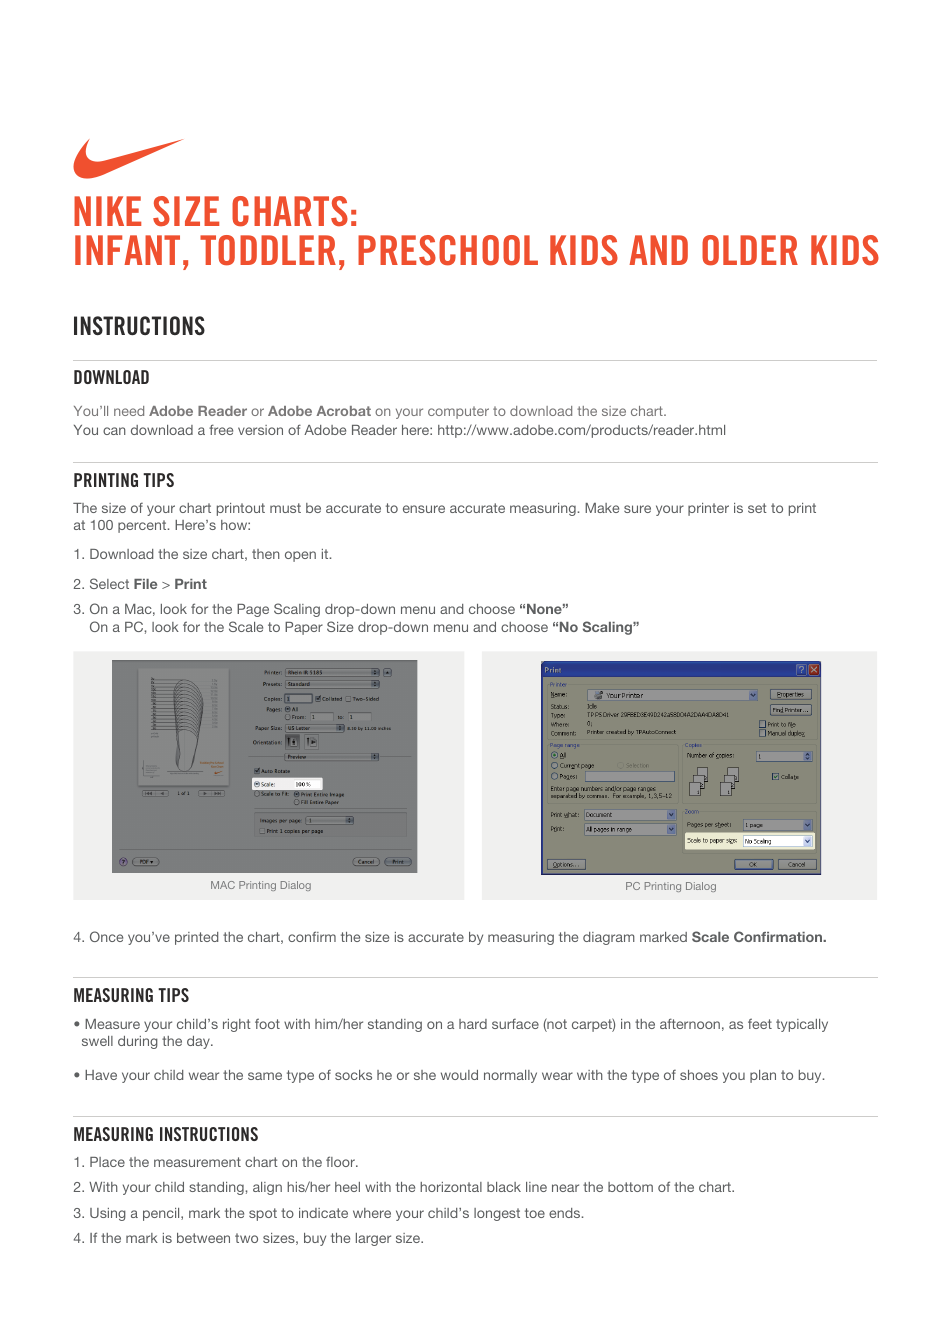 Infant, Toddler, Preschool Kids and Older Kids Size Chart - Nike, Page 1